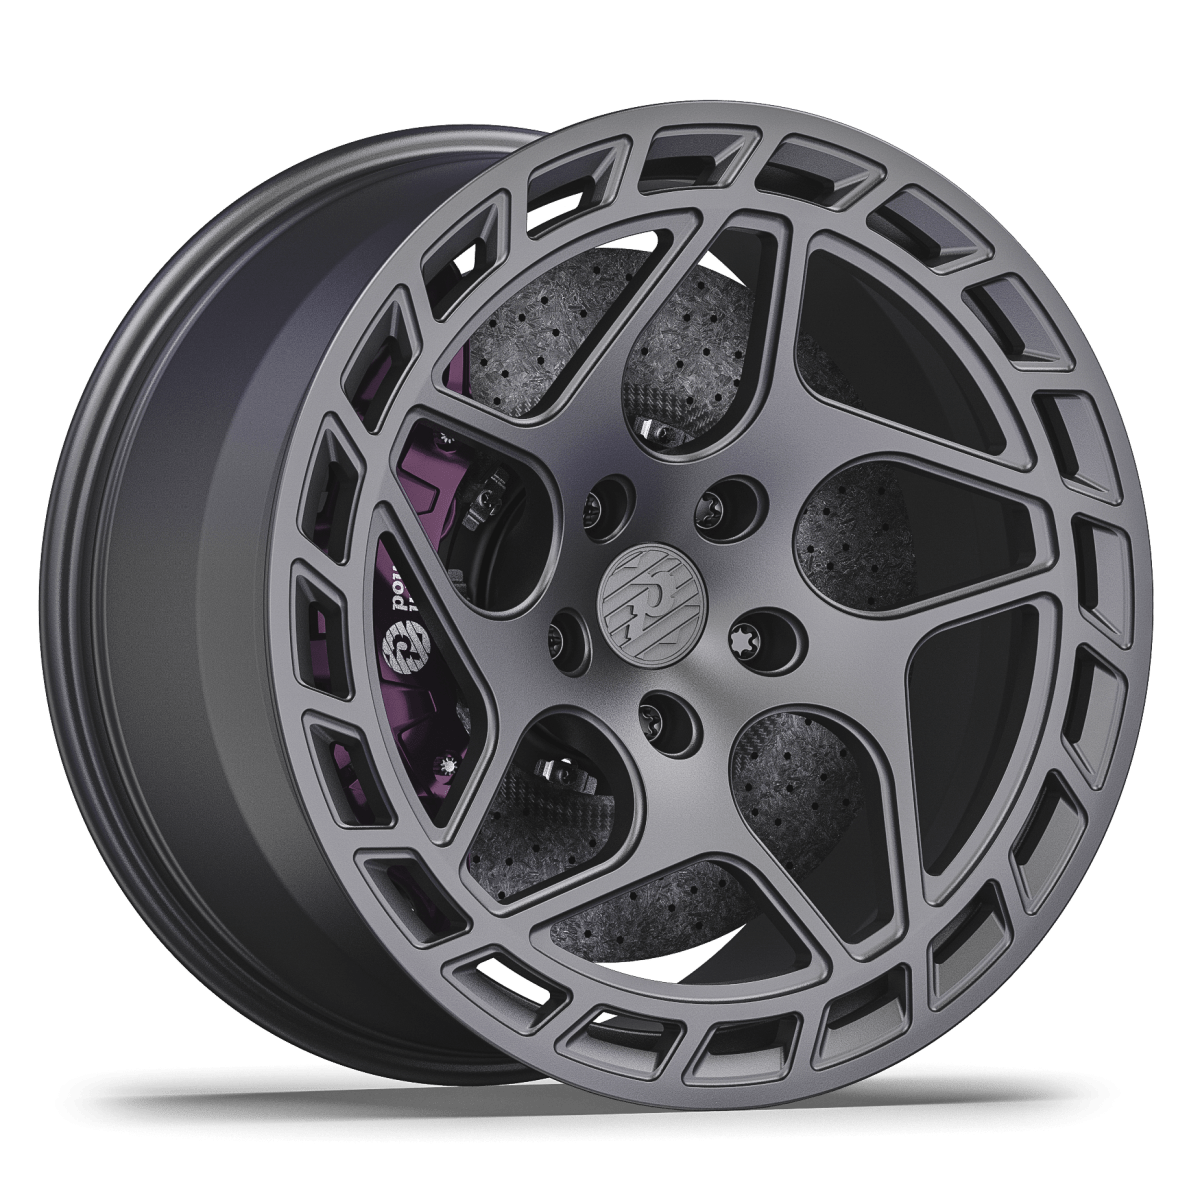 Диски Motorsport Racing Wheel BB-57. Power Wheels ms024 диски. Диски Power Wheels Urus r22. ABT Motorsport диски.